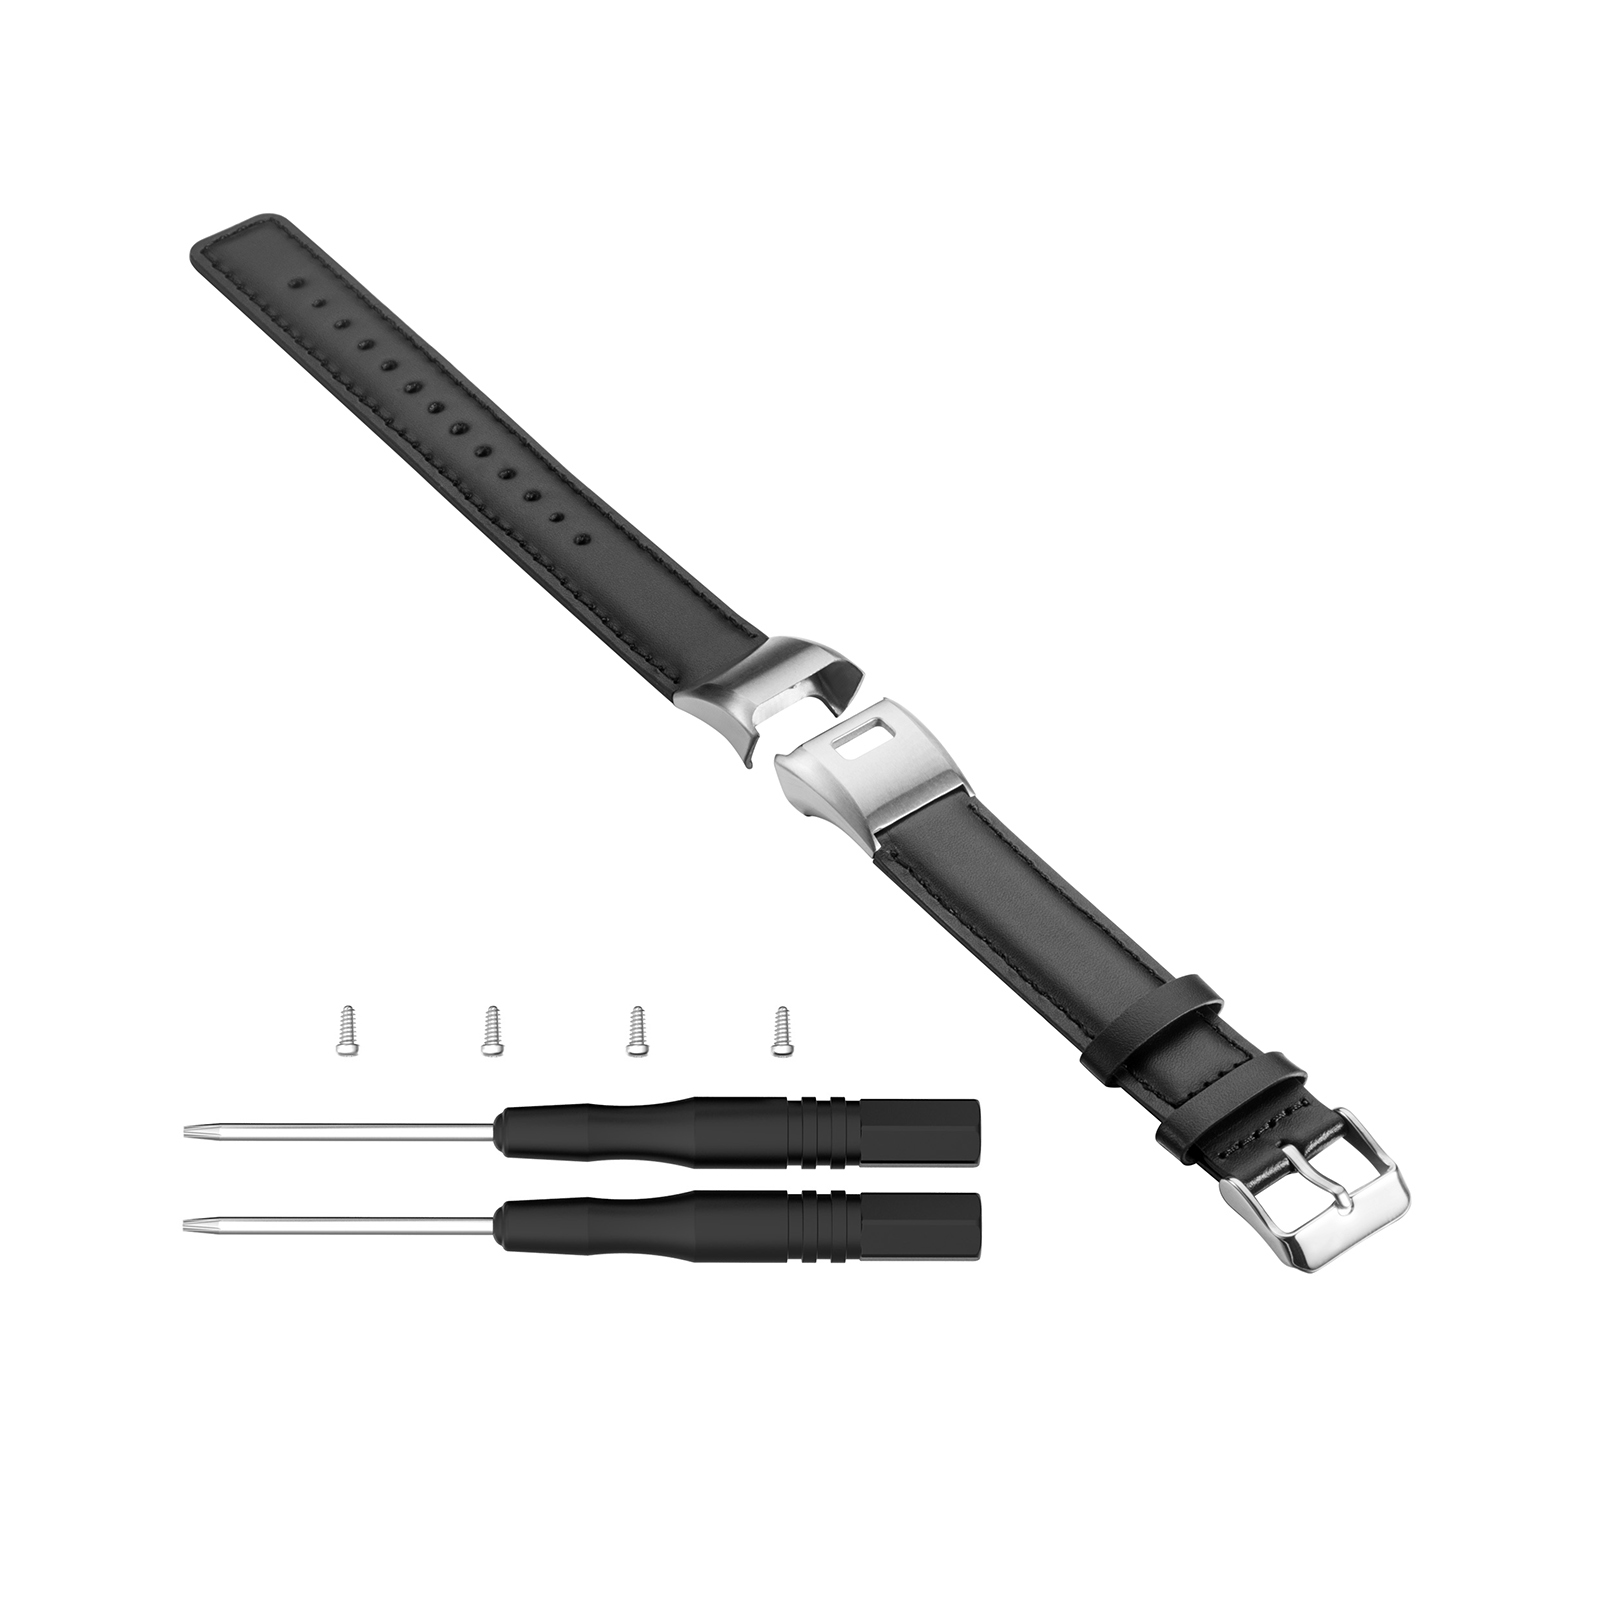 Bakeey-Retro-Metal-Buckle-Leather-Strap-Smart-Watch-Band-For-Garmin-Vivosmart-HR-1739351-3